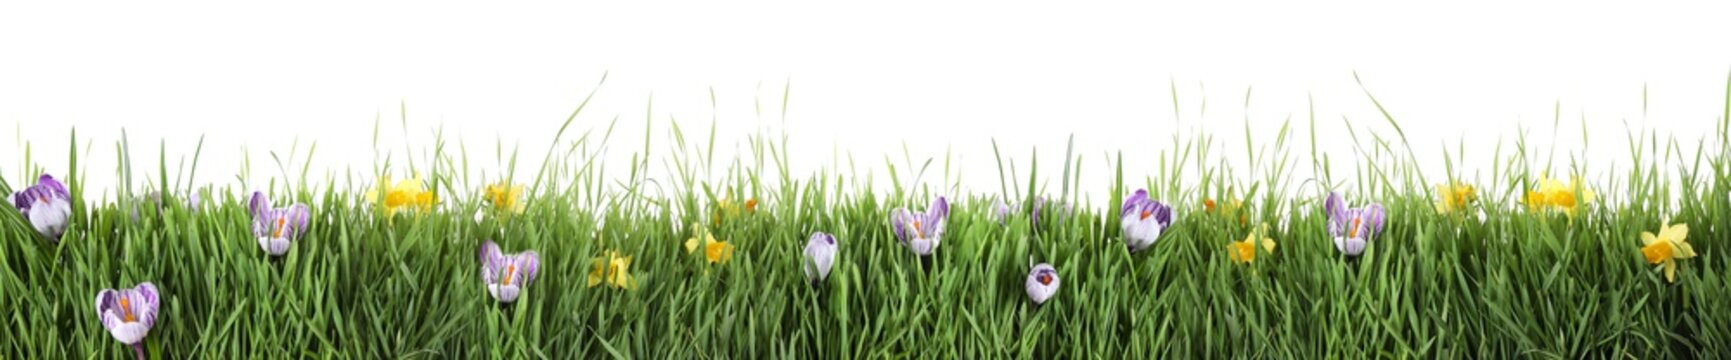 Fresh green grass and flowers on white background, banner design. Spring season